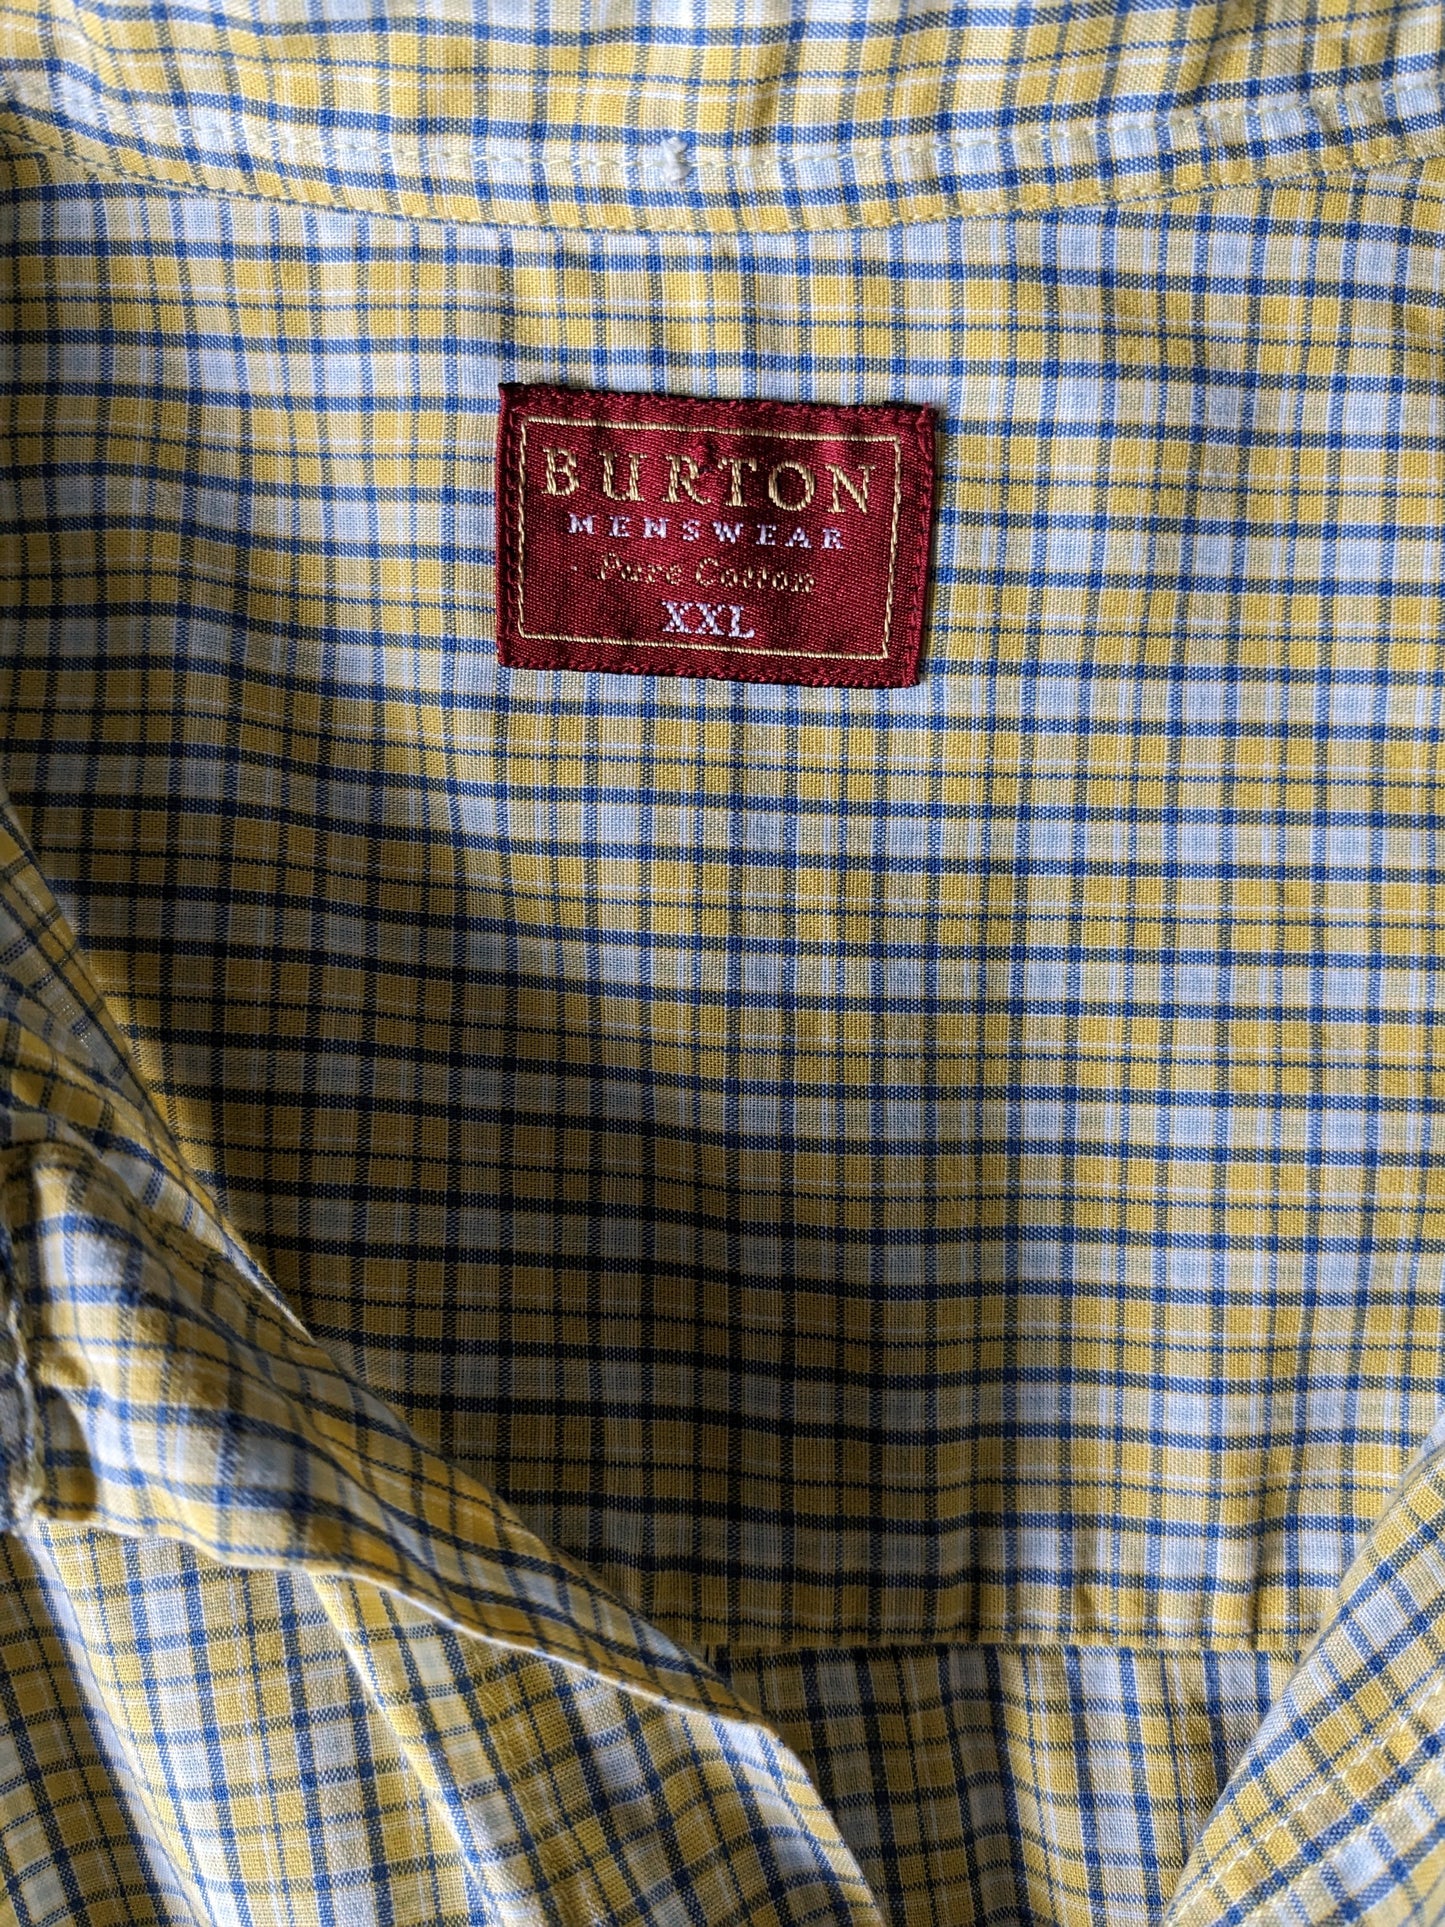 Camisa de ropa masculina Burton manga corta. Amarillo azul blanco a cuadros. Tamaño XXL / 2XL.